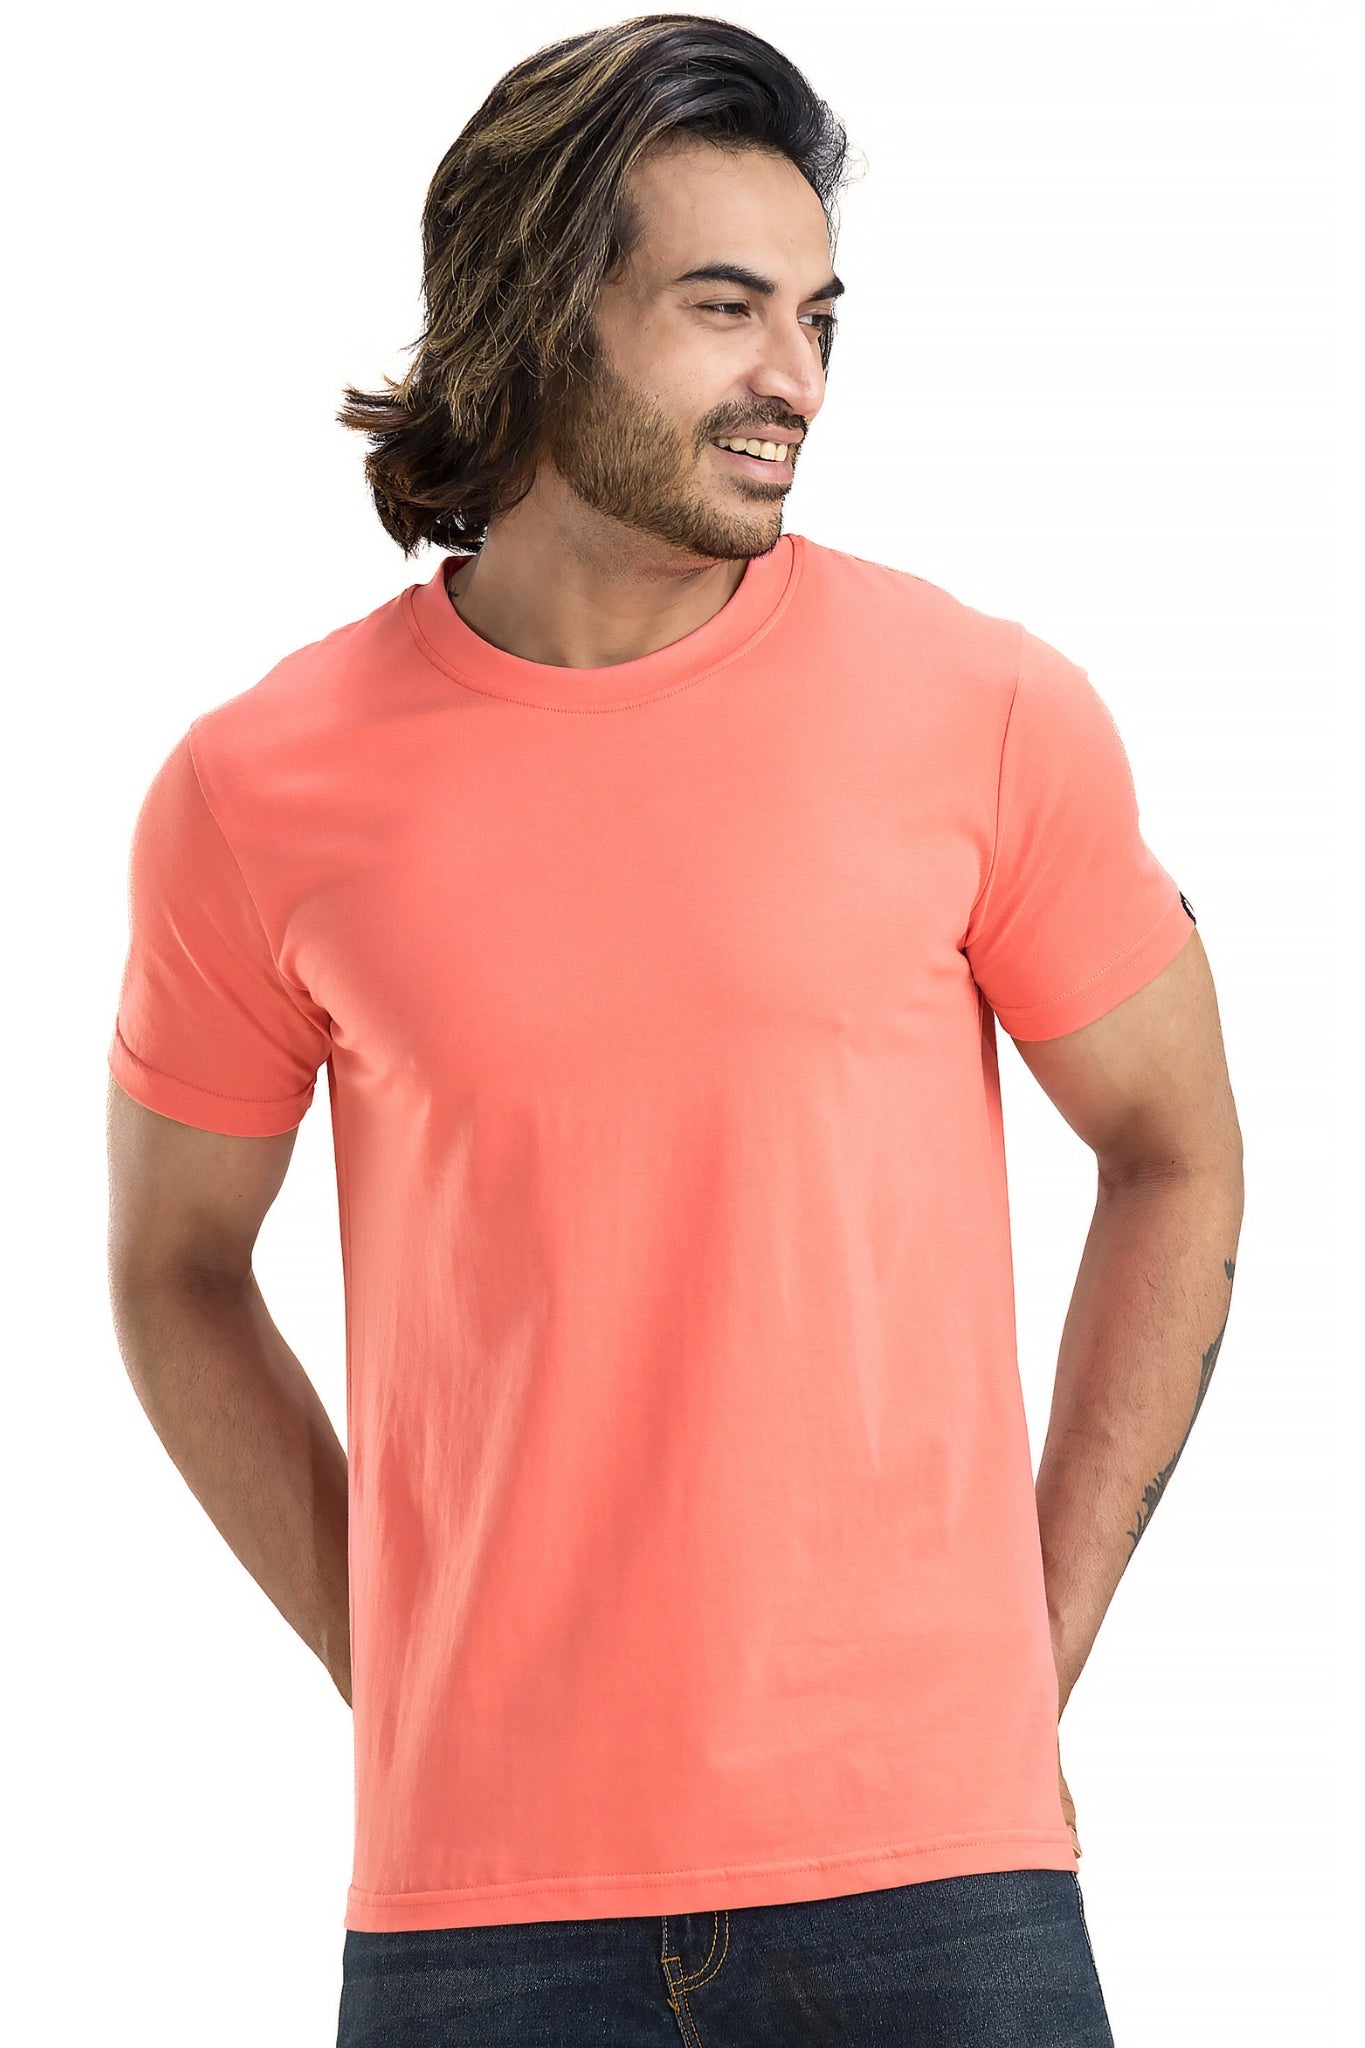 Men's Solid Basic Sugar Coral T-Shirt